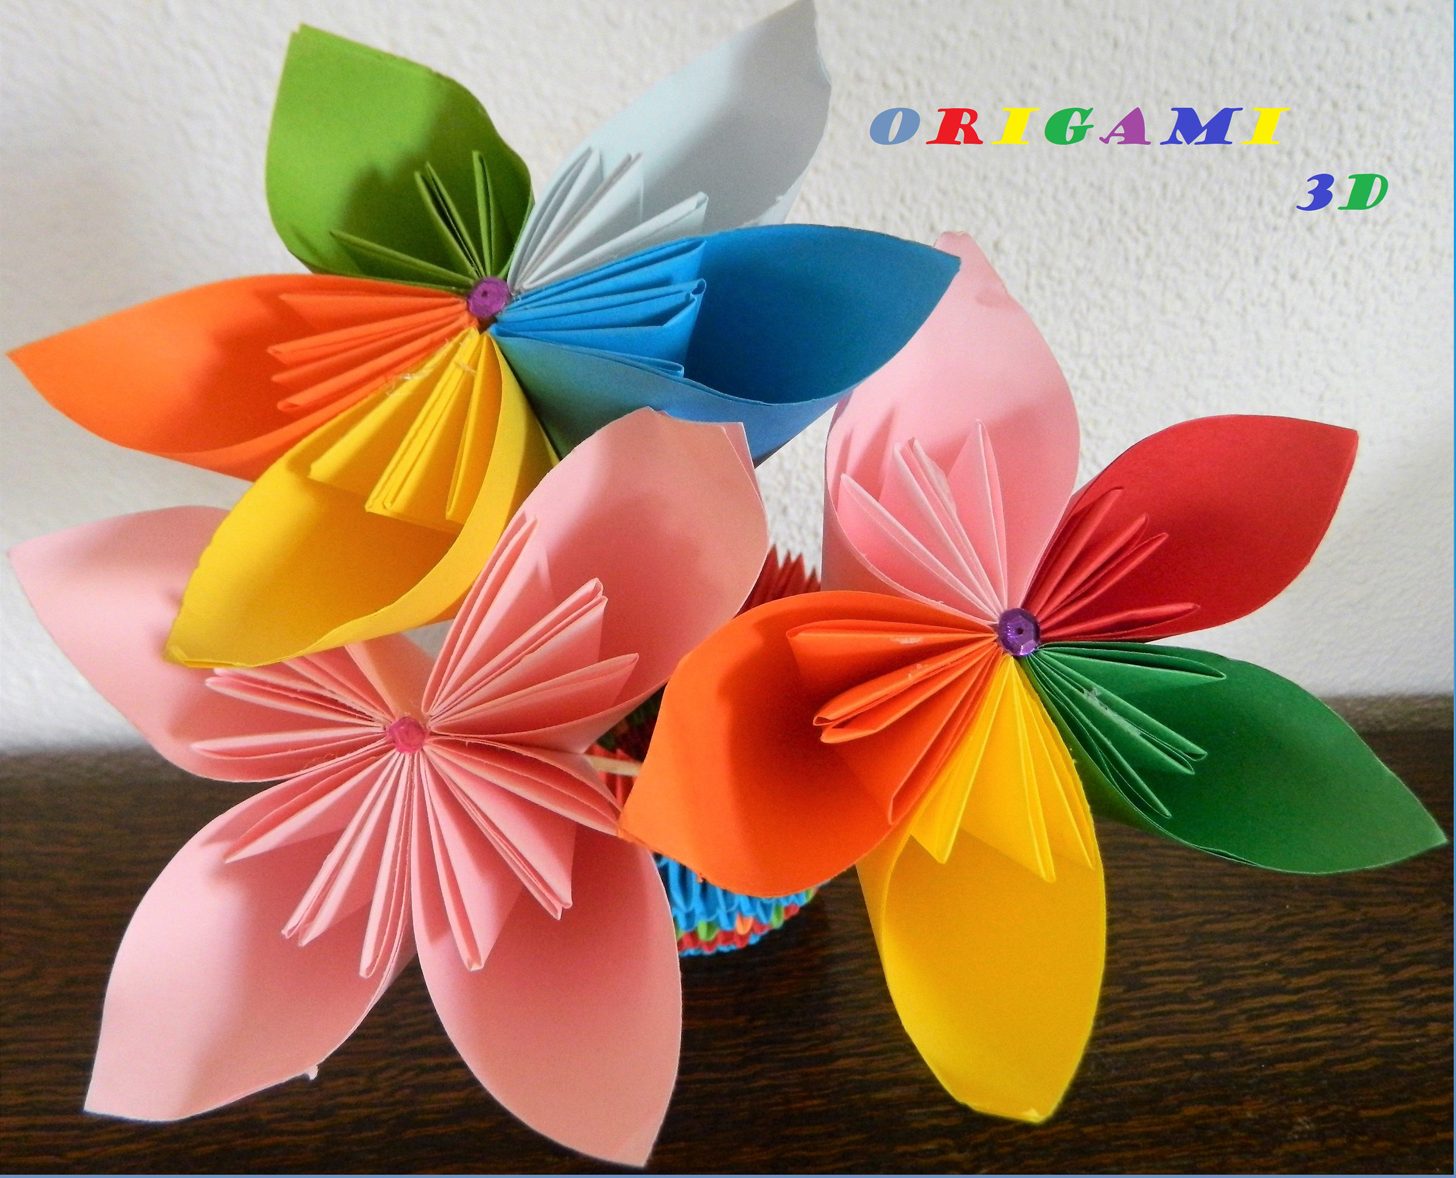 Origami 3D - Les Estivales des Taillades